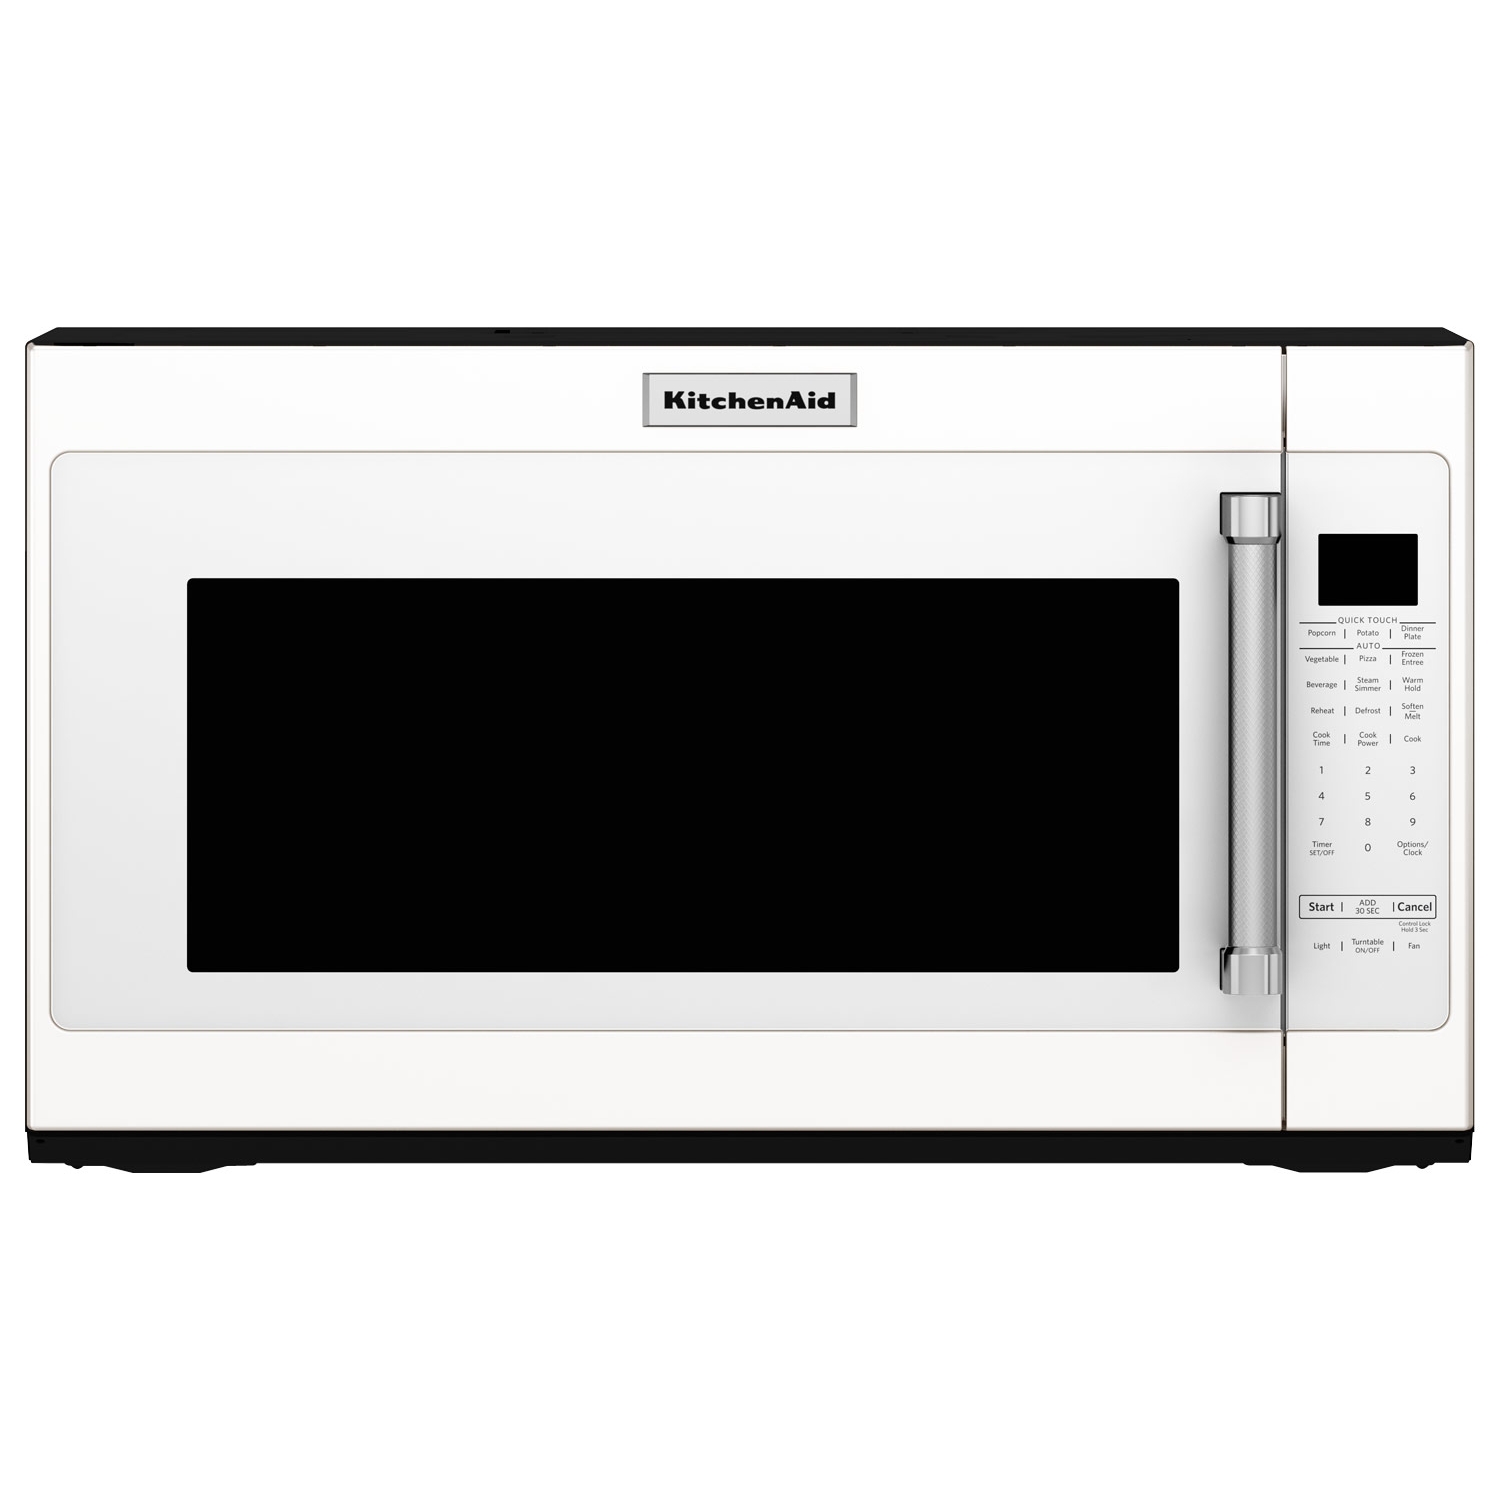 KitchenAid Microwave Model KMHS120EWH